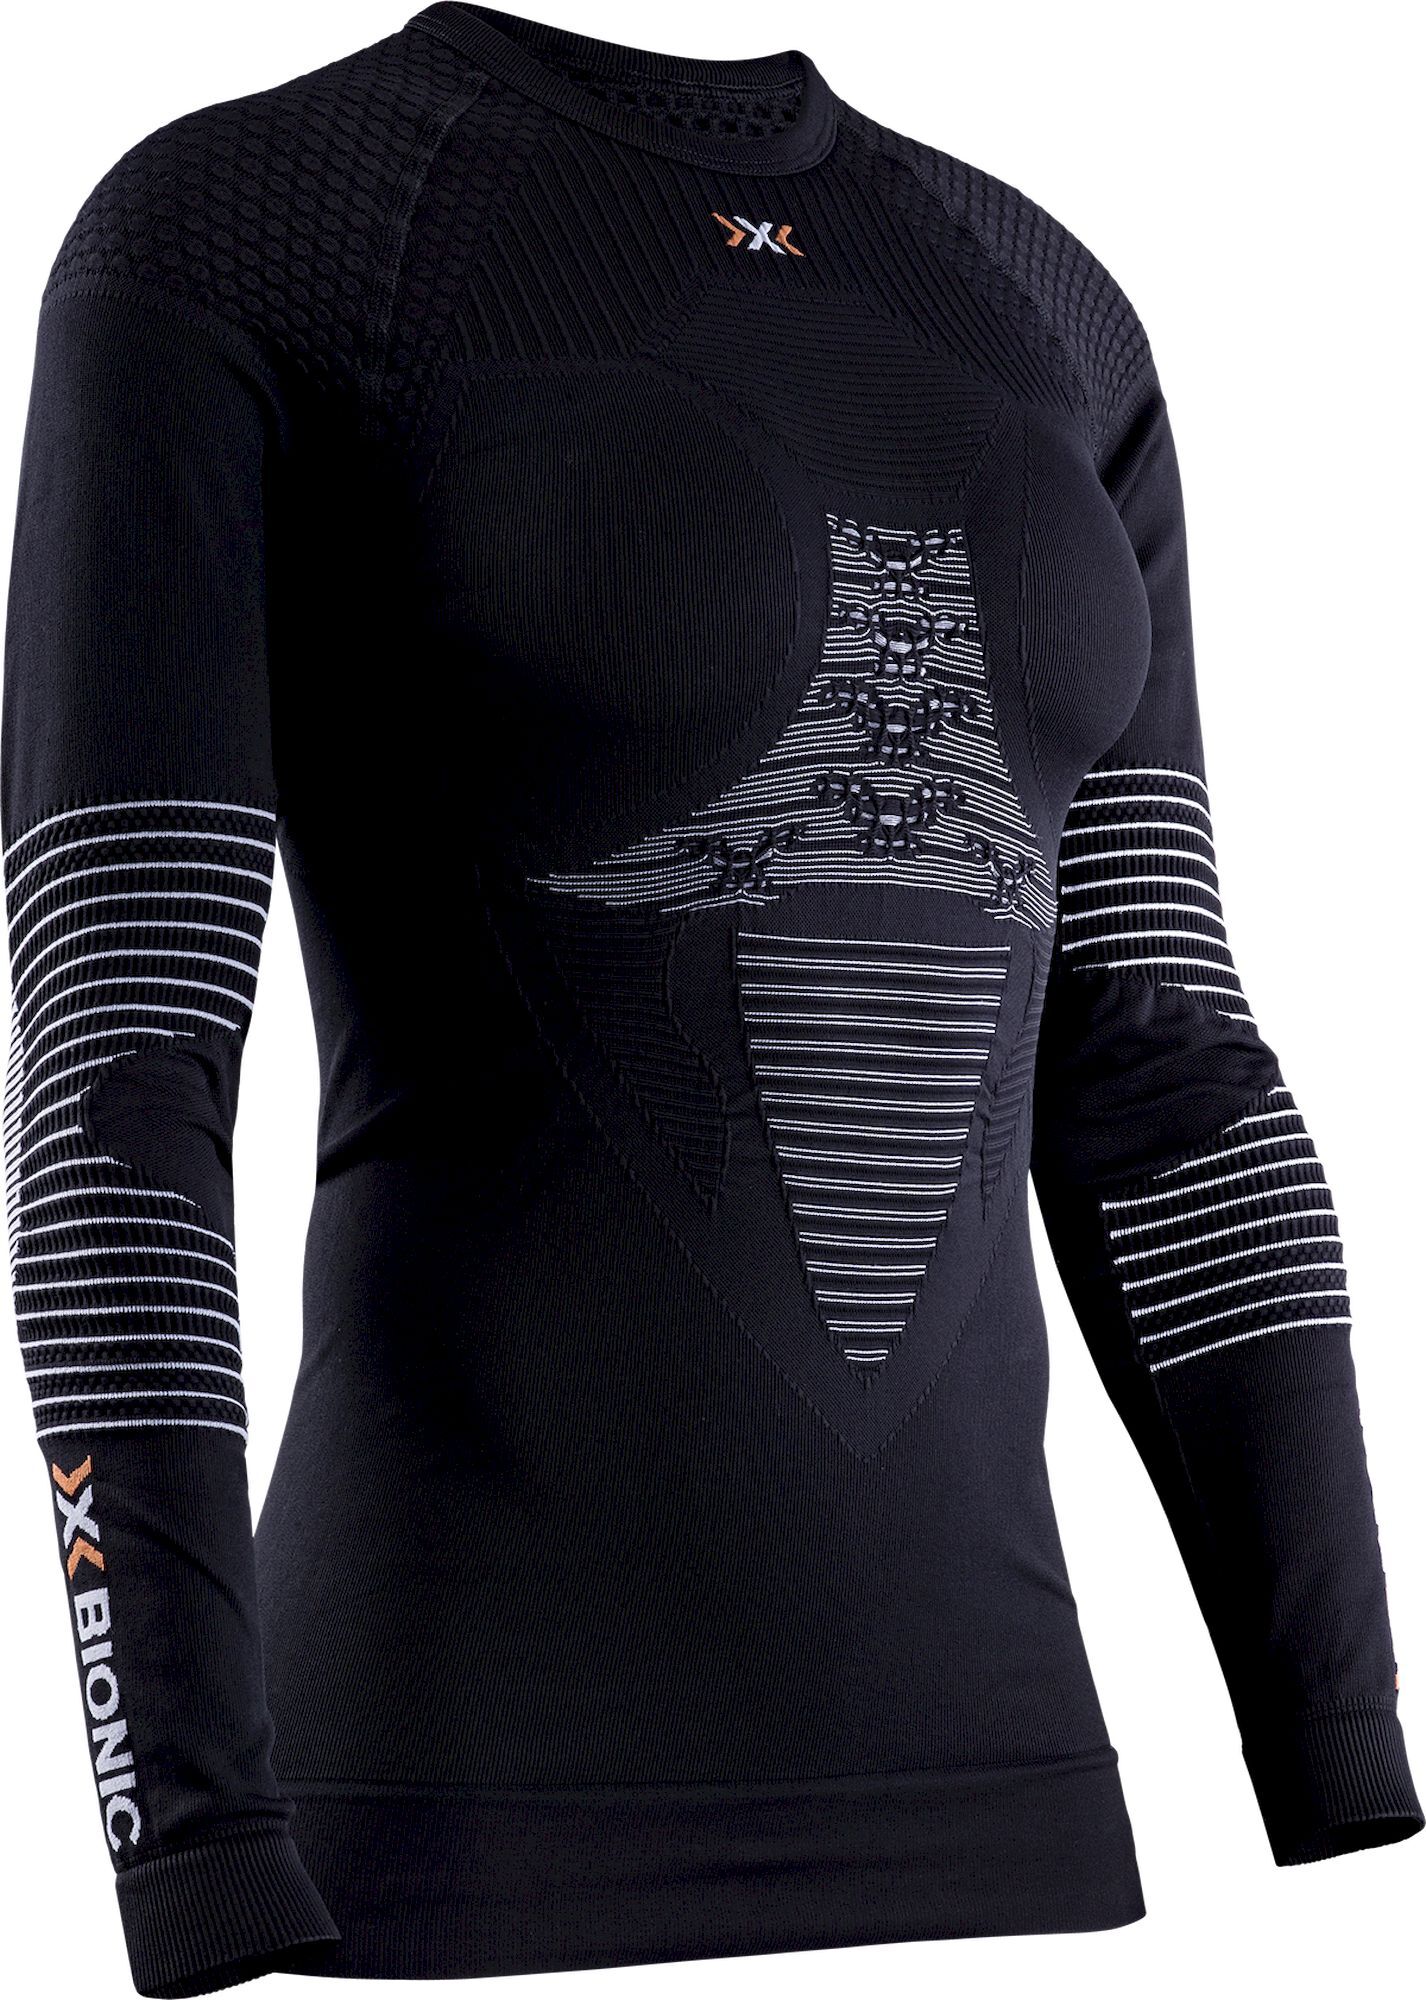 X-Bionic Energizer 4.0 Shirt Long Sleeve - Dámsky Dres